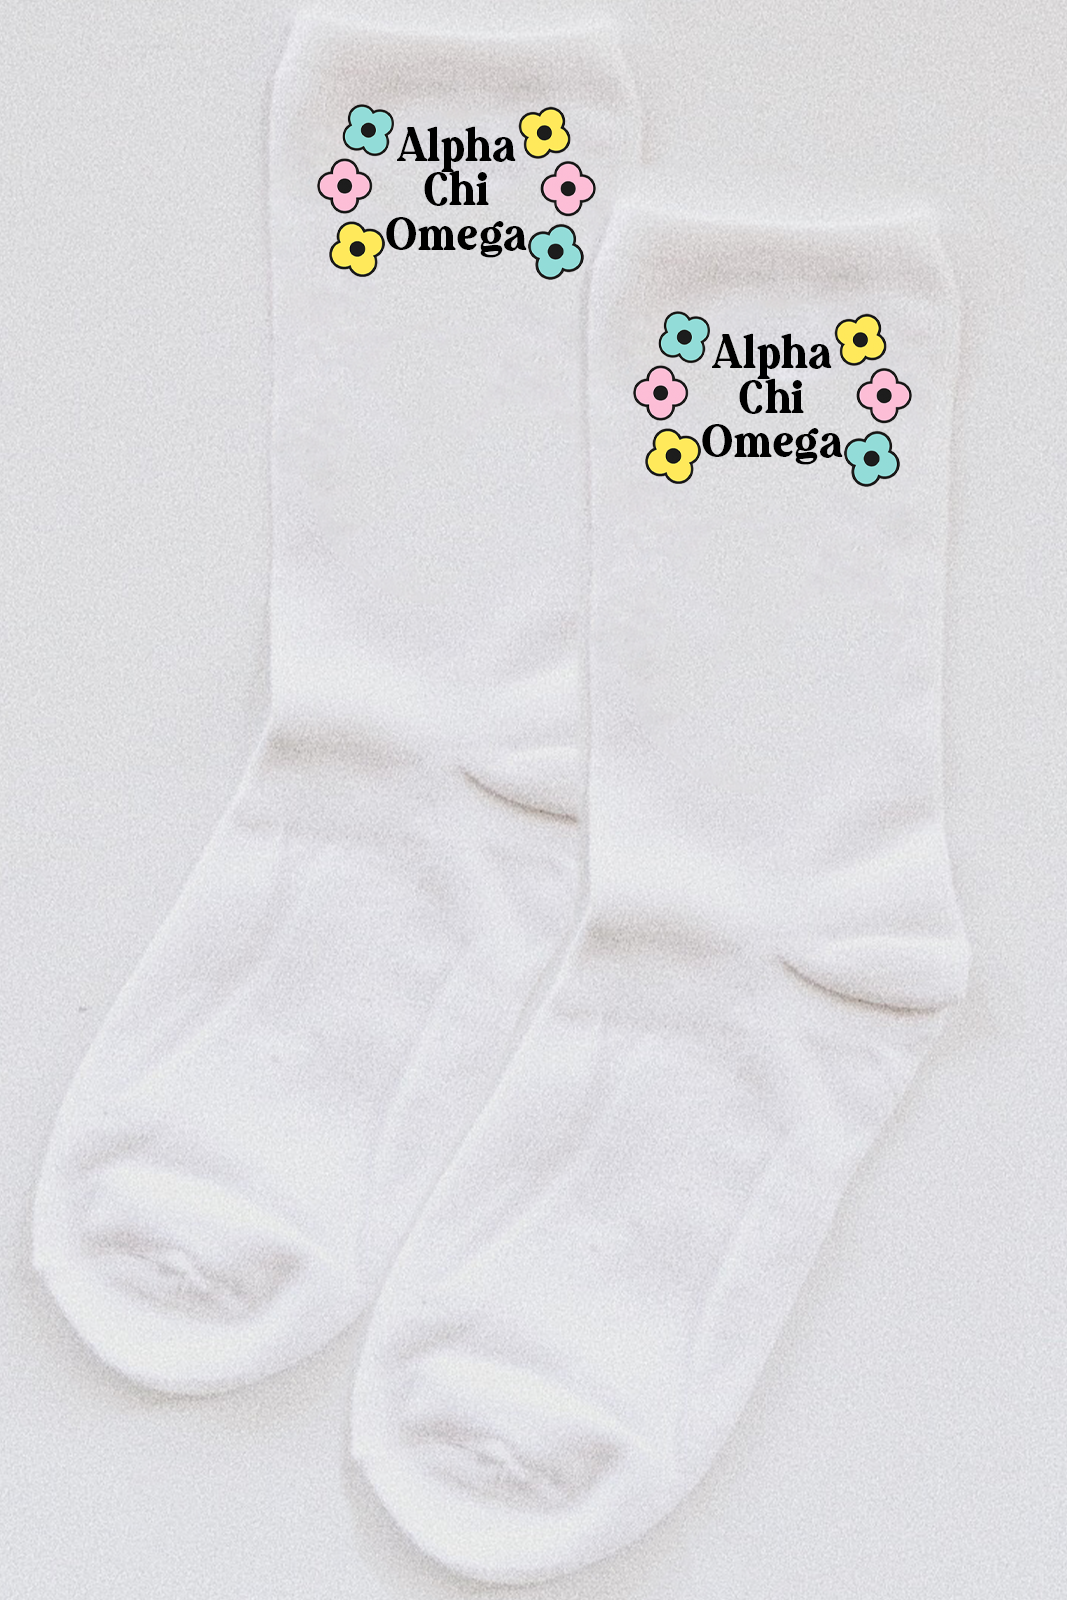 Alpha Chi Omega Flower socks - Spikes and Seams Greek